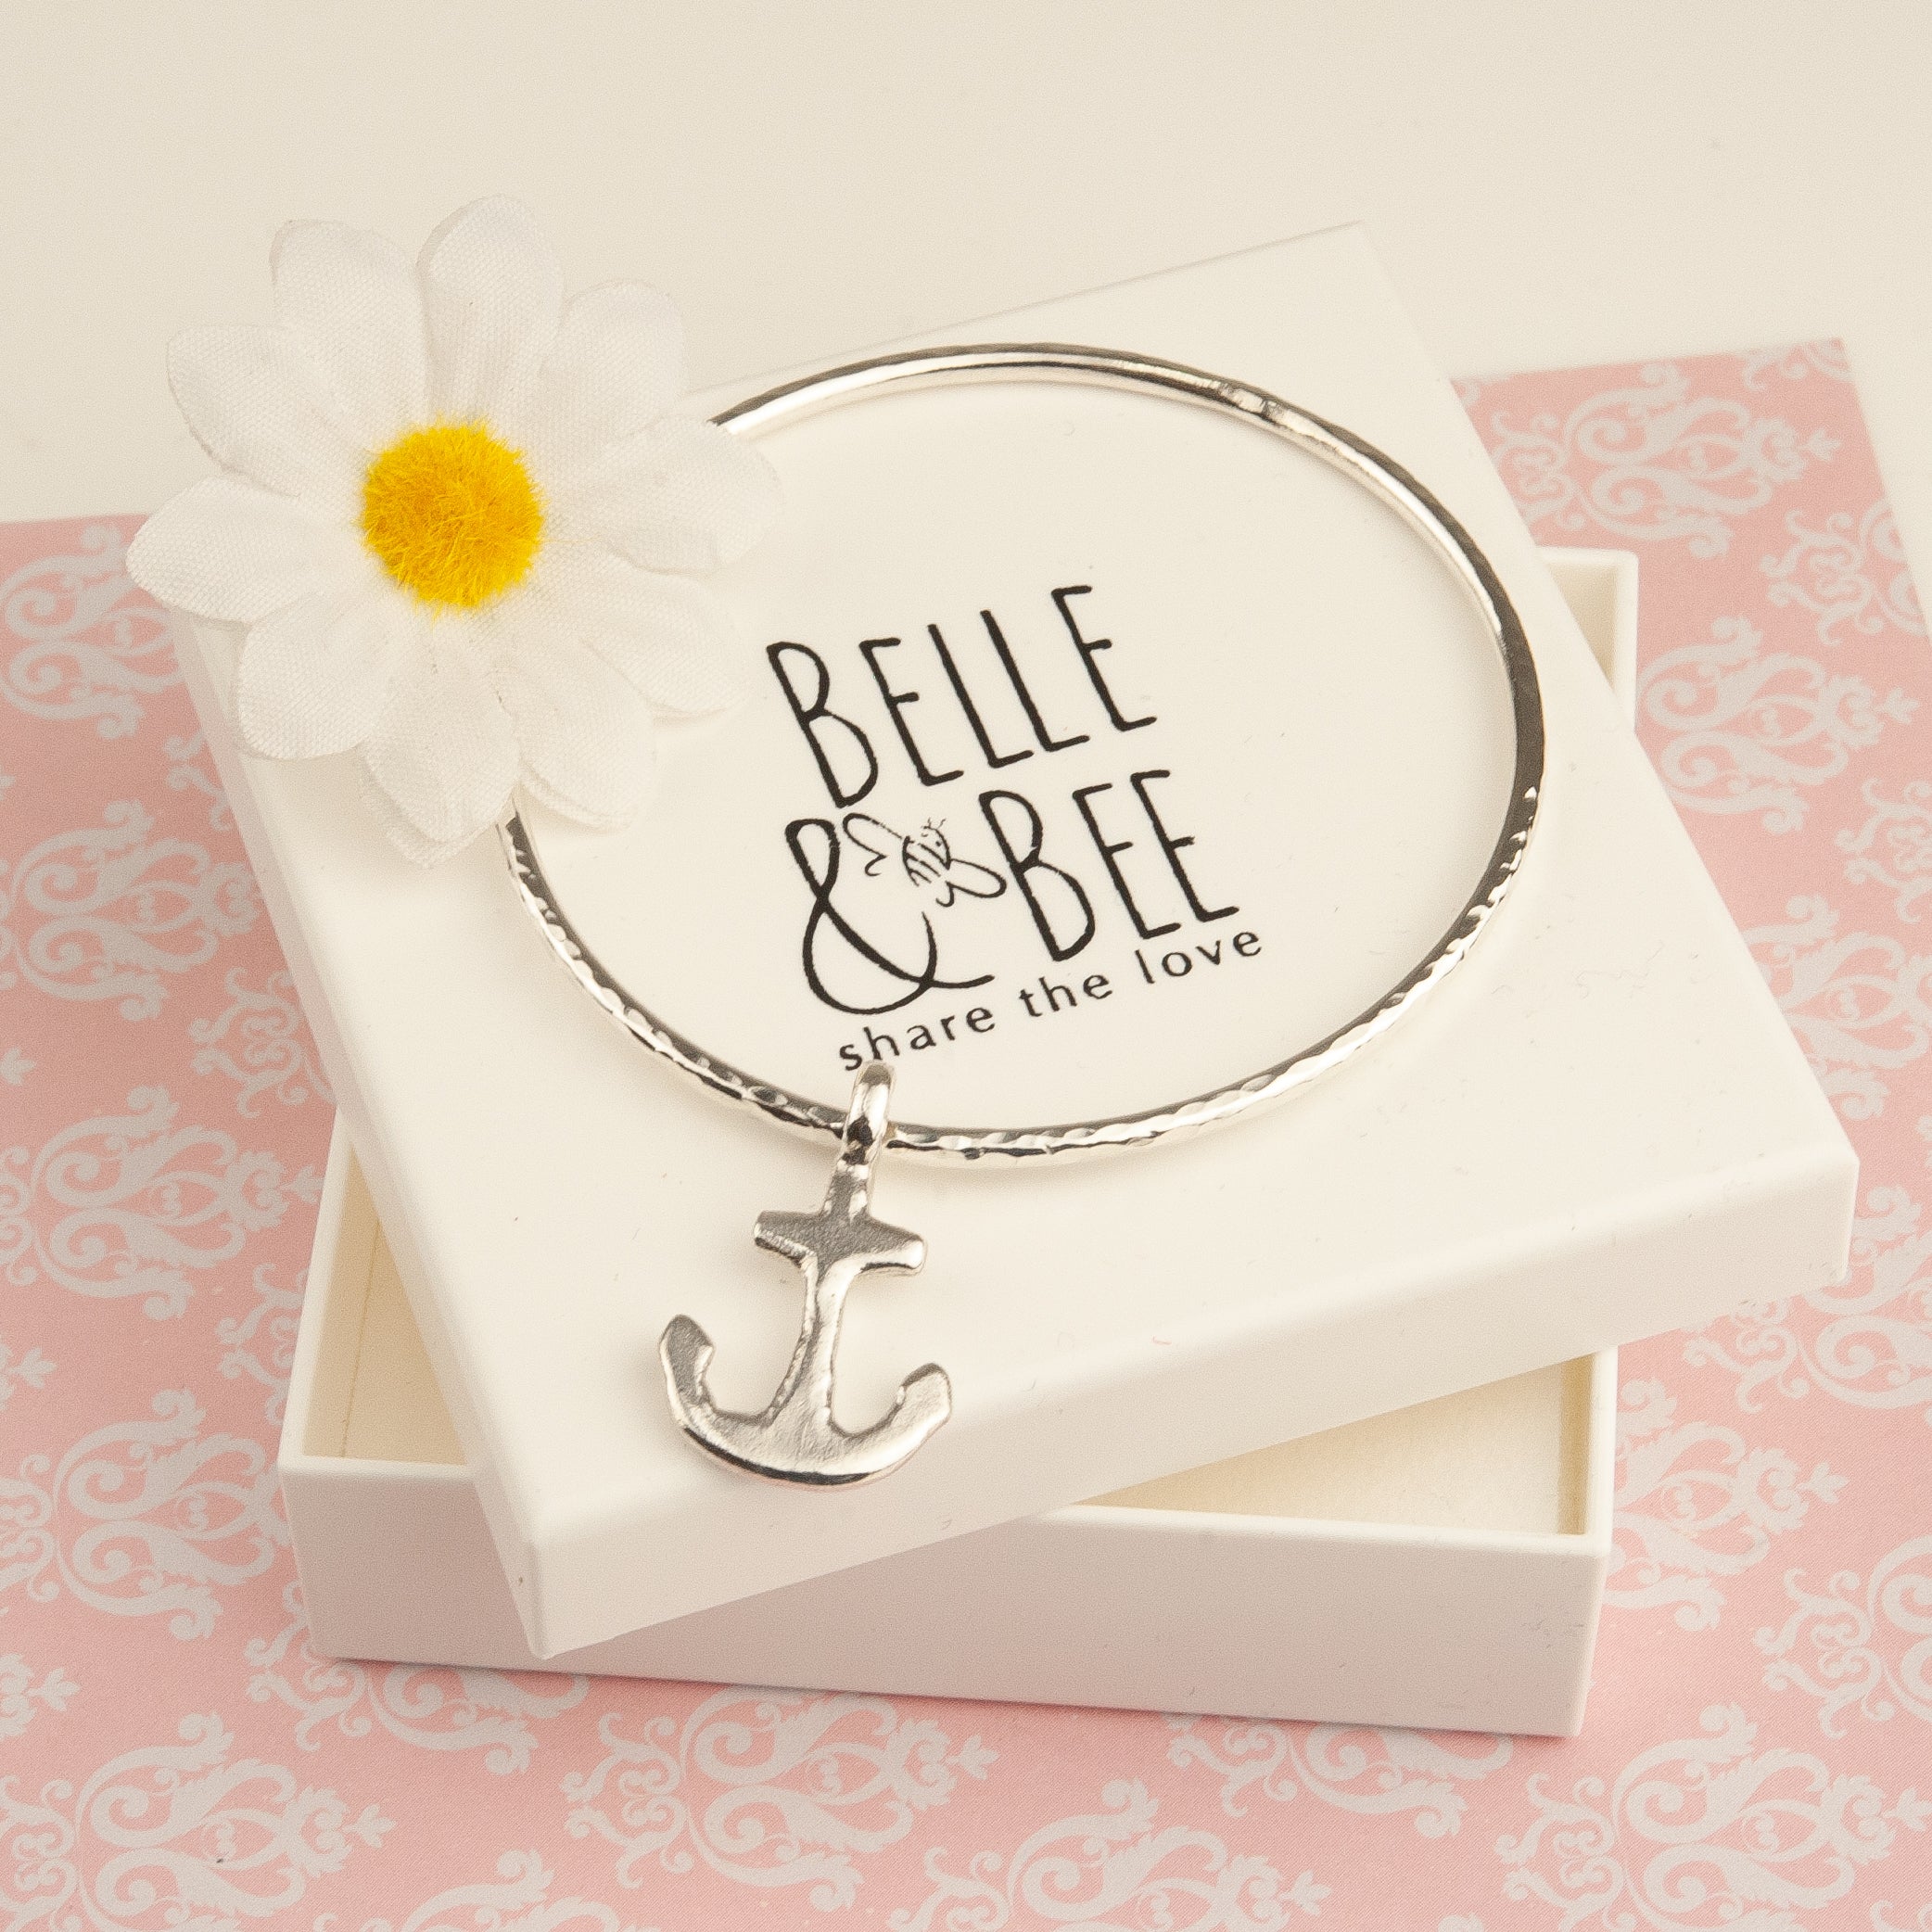 Belle & Bee midi anchor bangle